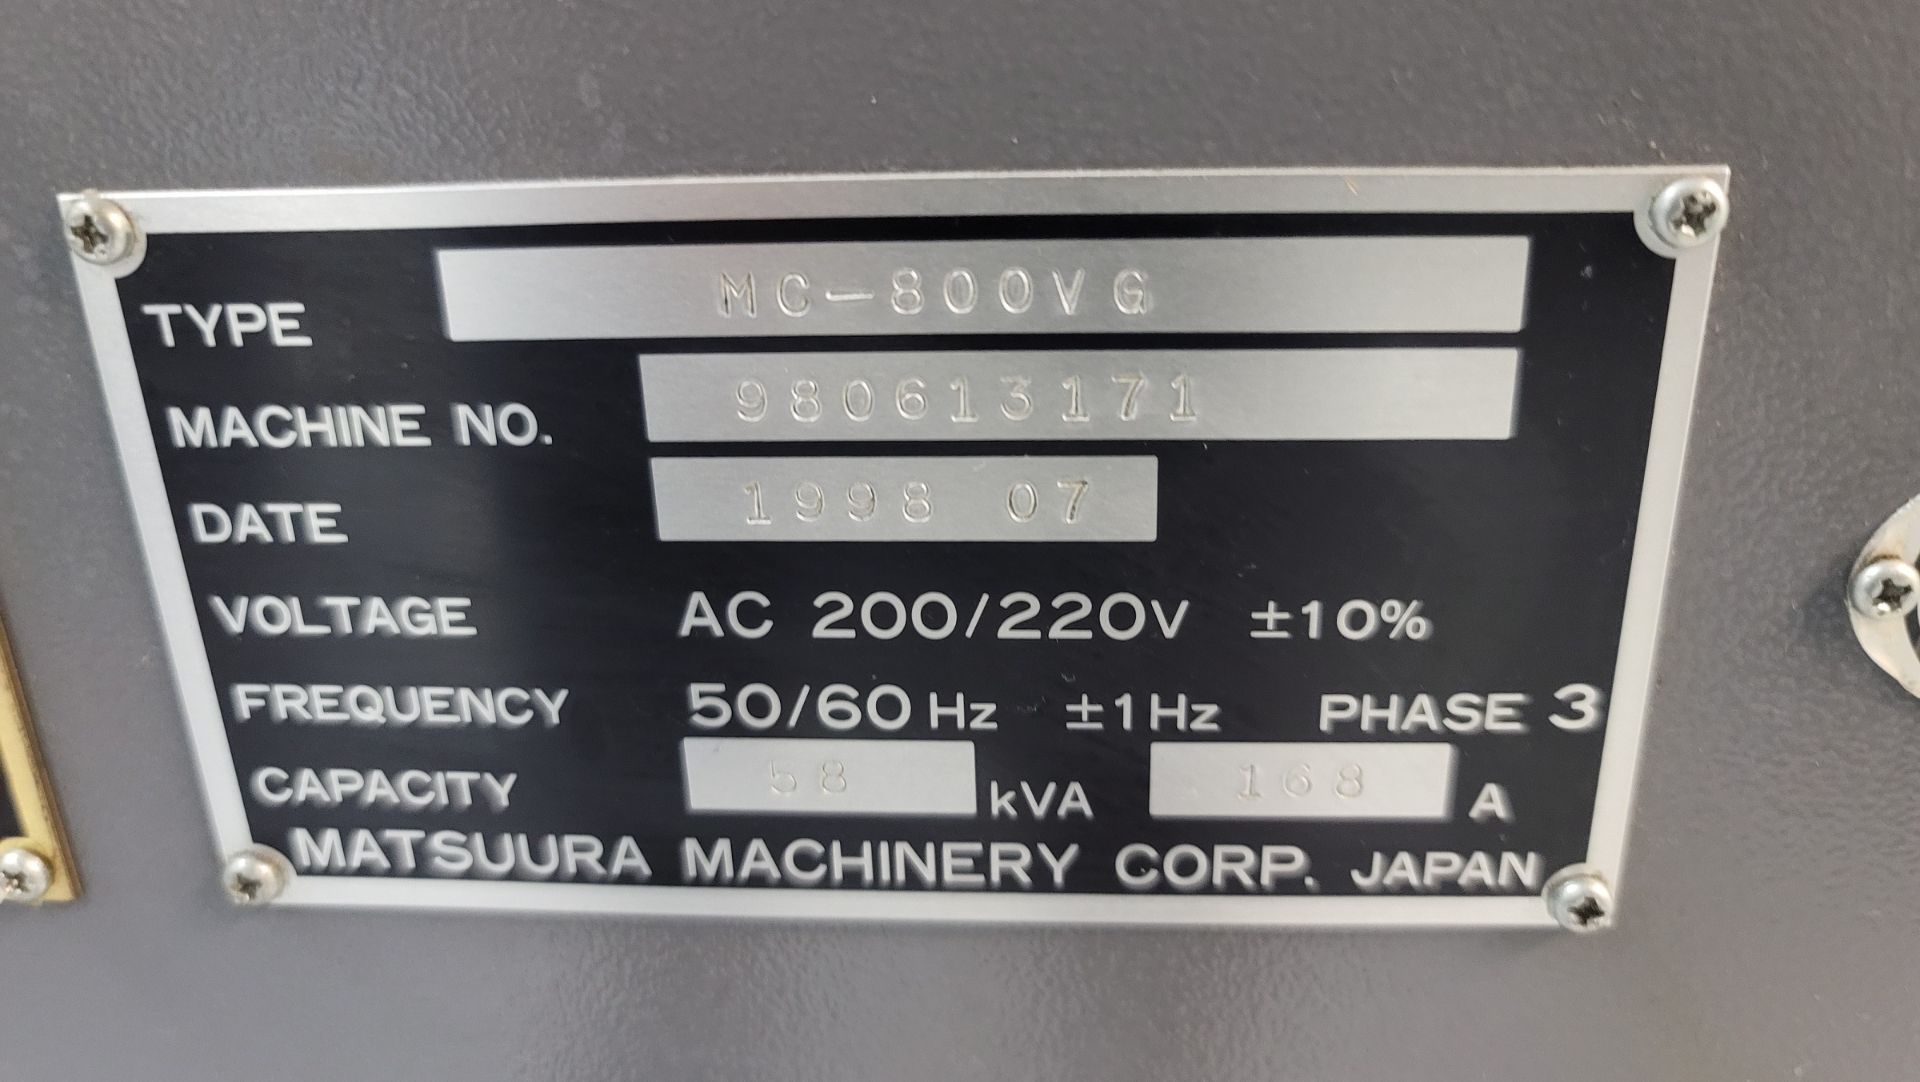 1998 MATSUURA MC-800VG VERTICAL MACHINING CENTER, TRAVELS: 32" X 20" X 20", YASNAC CONTROL, CHIP - Image 12 of 12